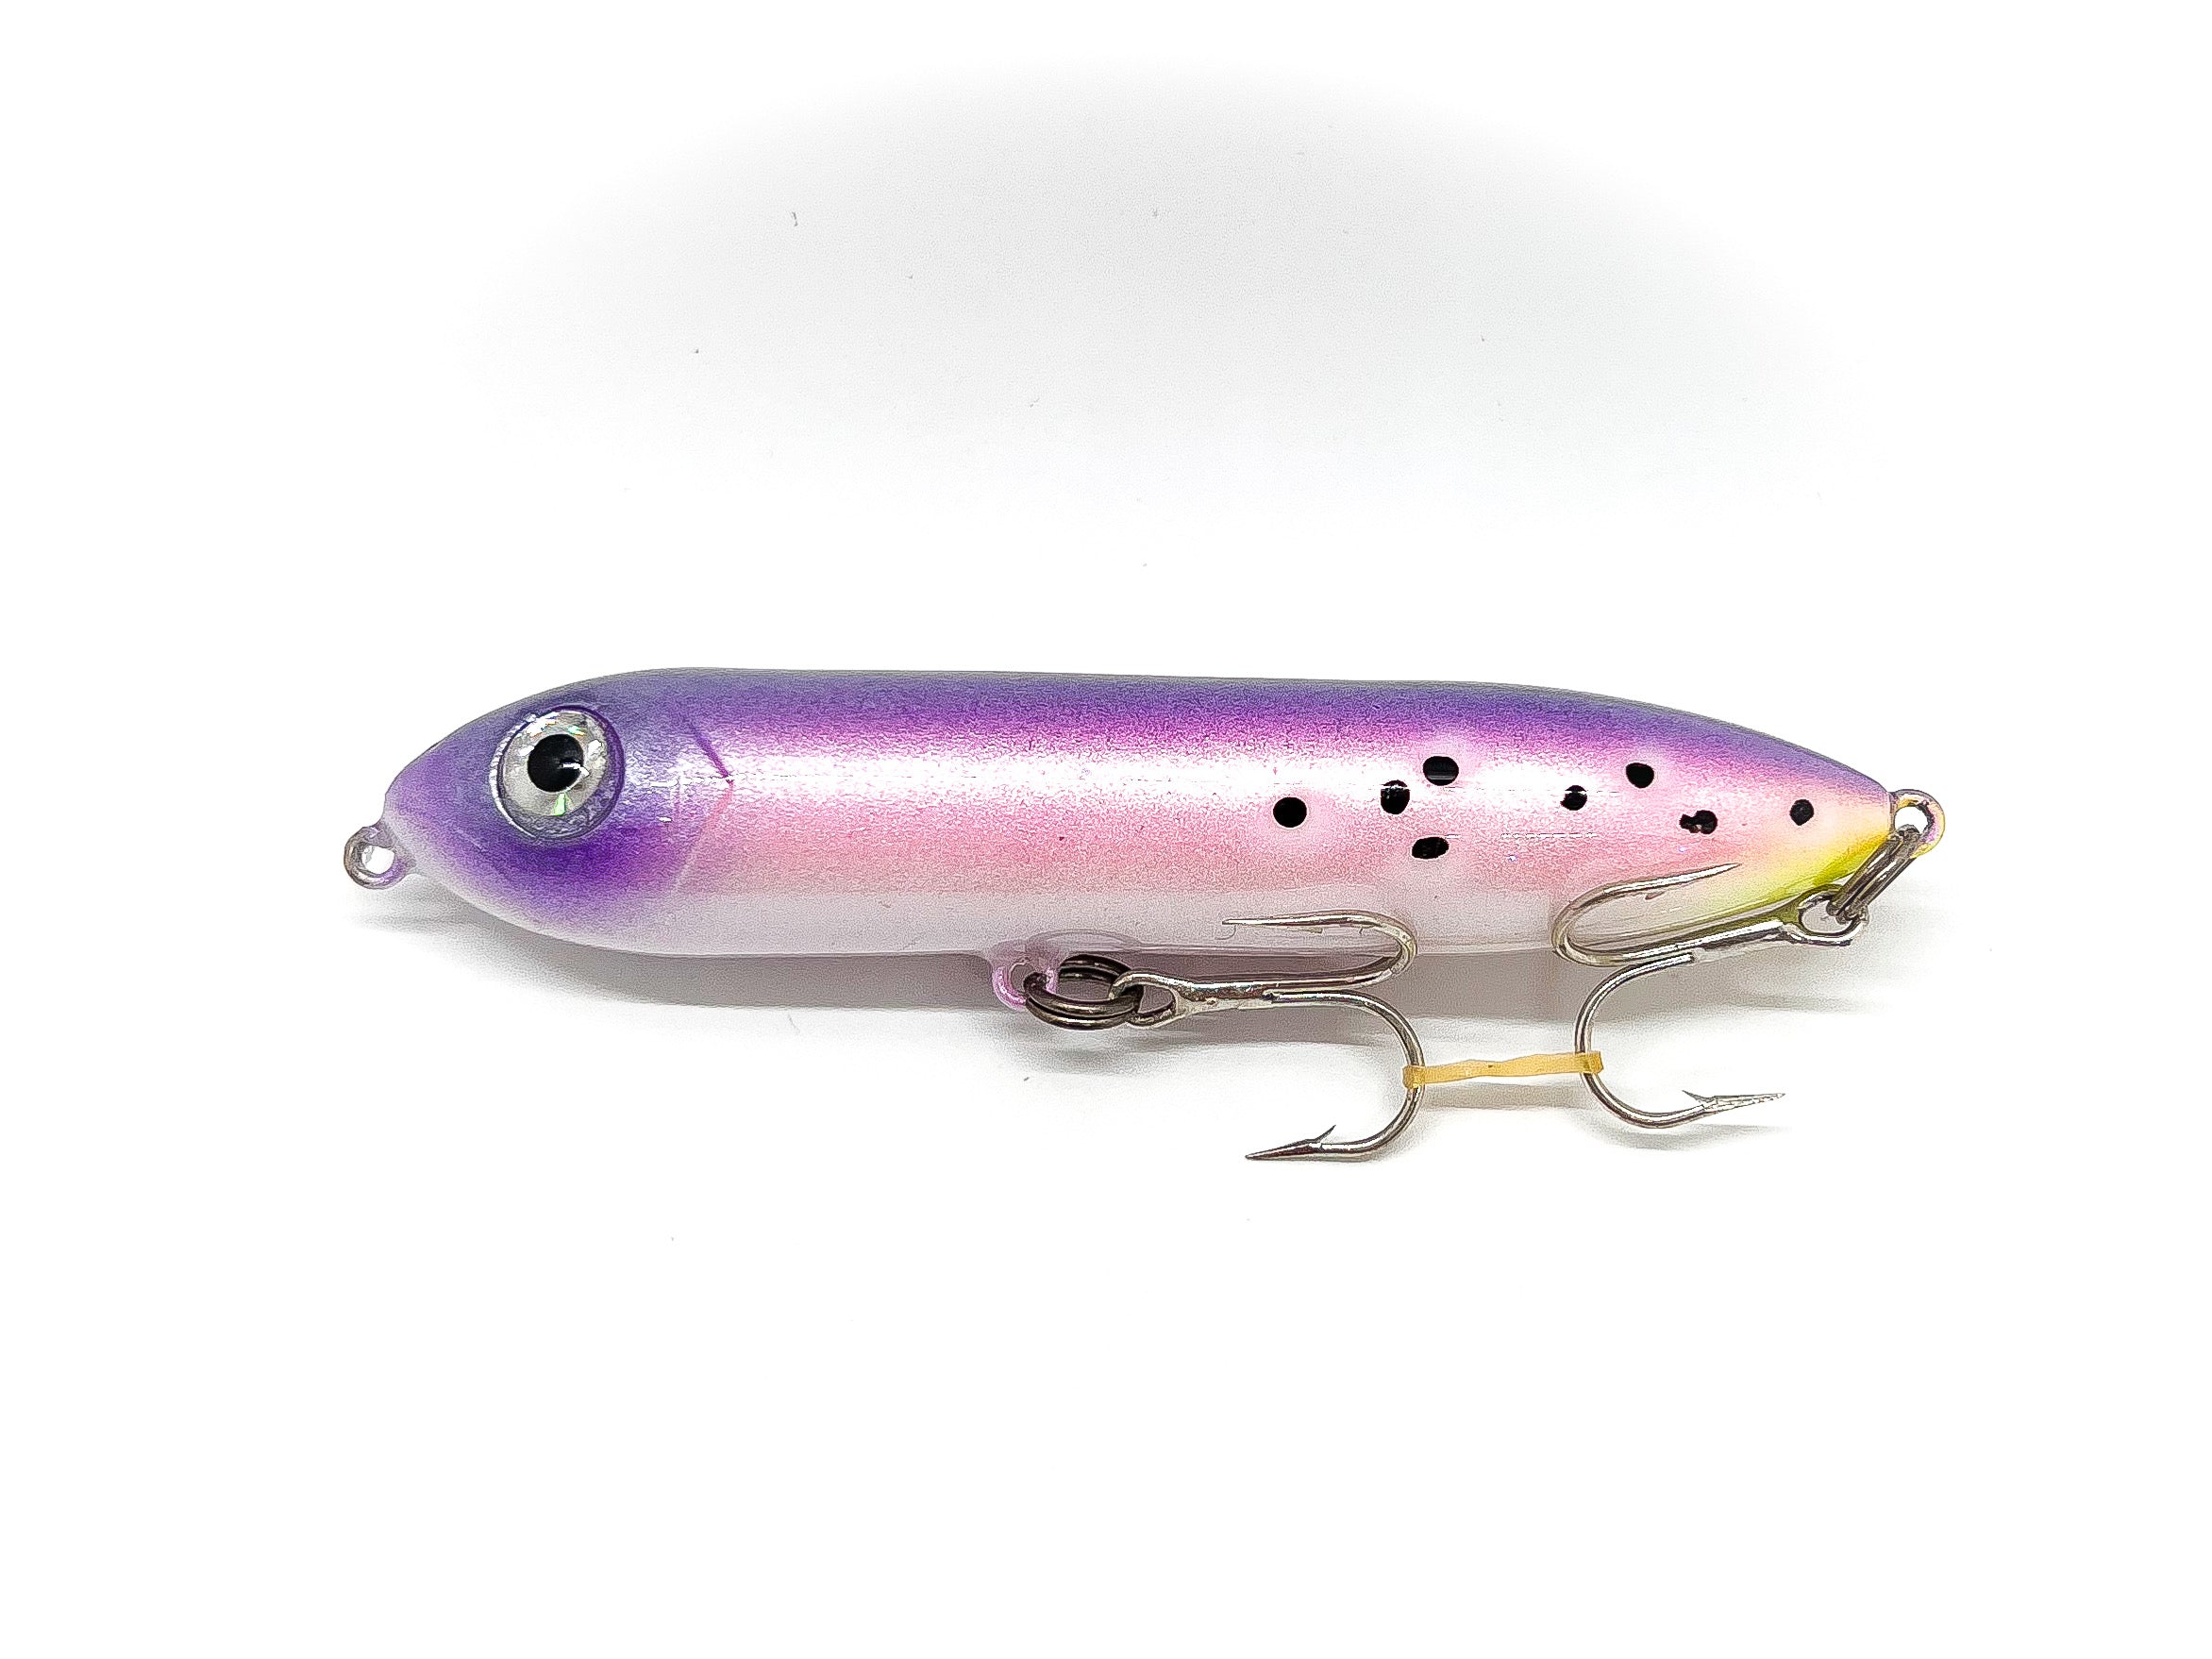 Heddon Saltwater Super Spook, Jr. Fishing Lure - White/Pink/Silver